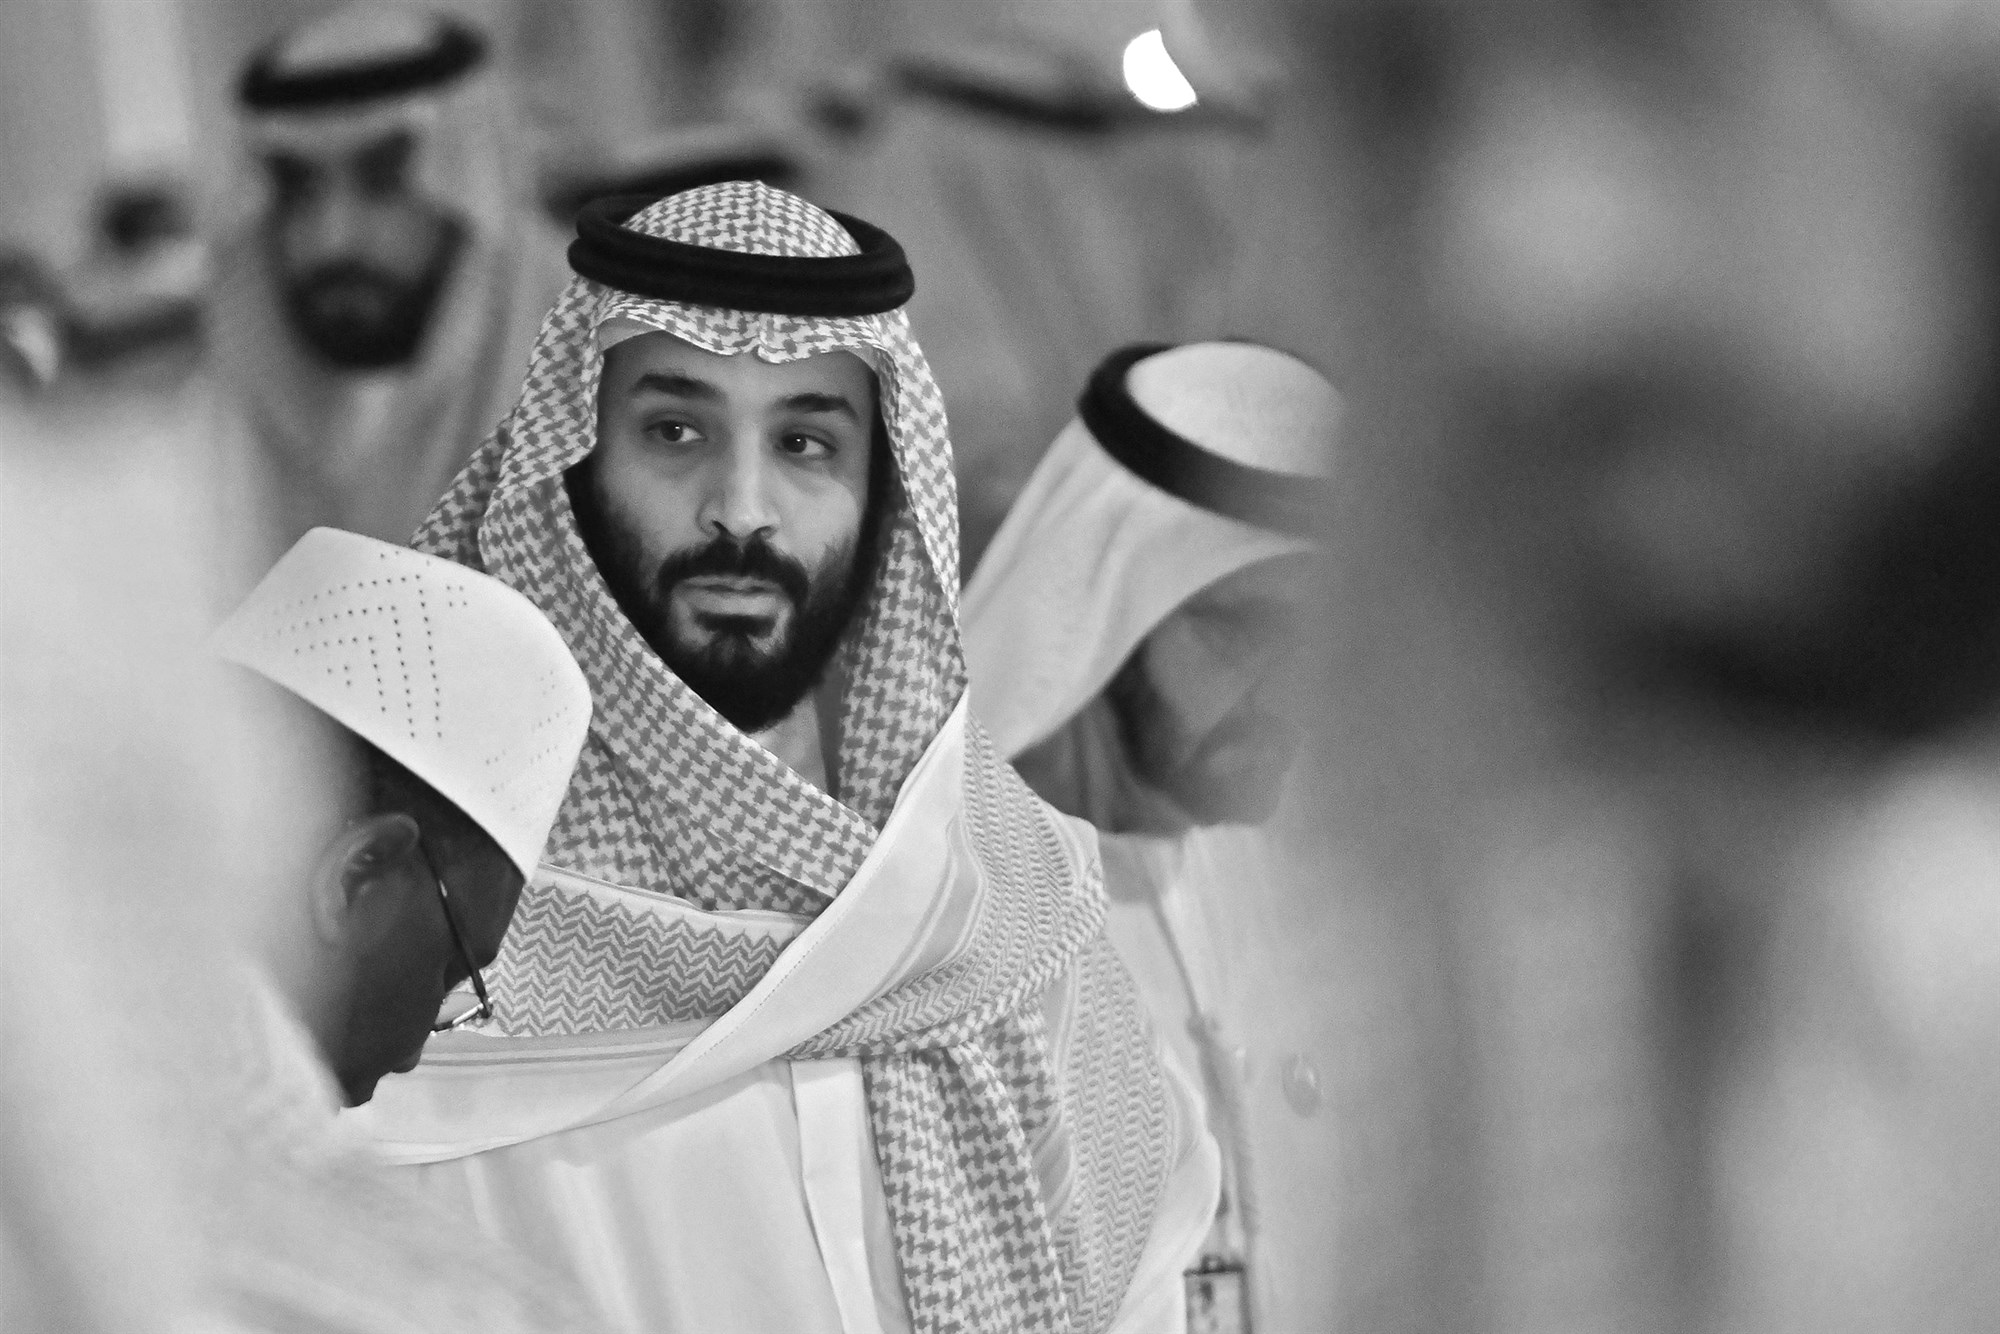  U.S. officially points the finger at Saudi Crown Prince Mohammed bin Salman for Khashoggi killing